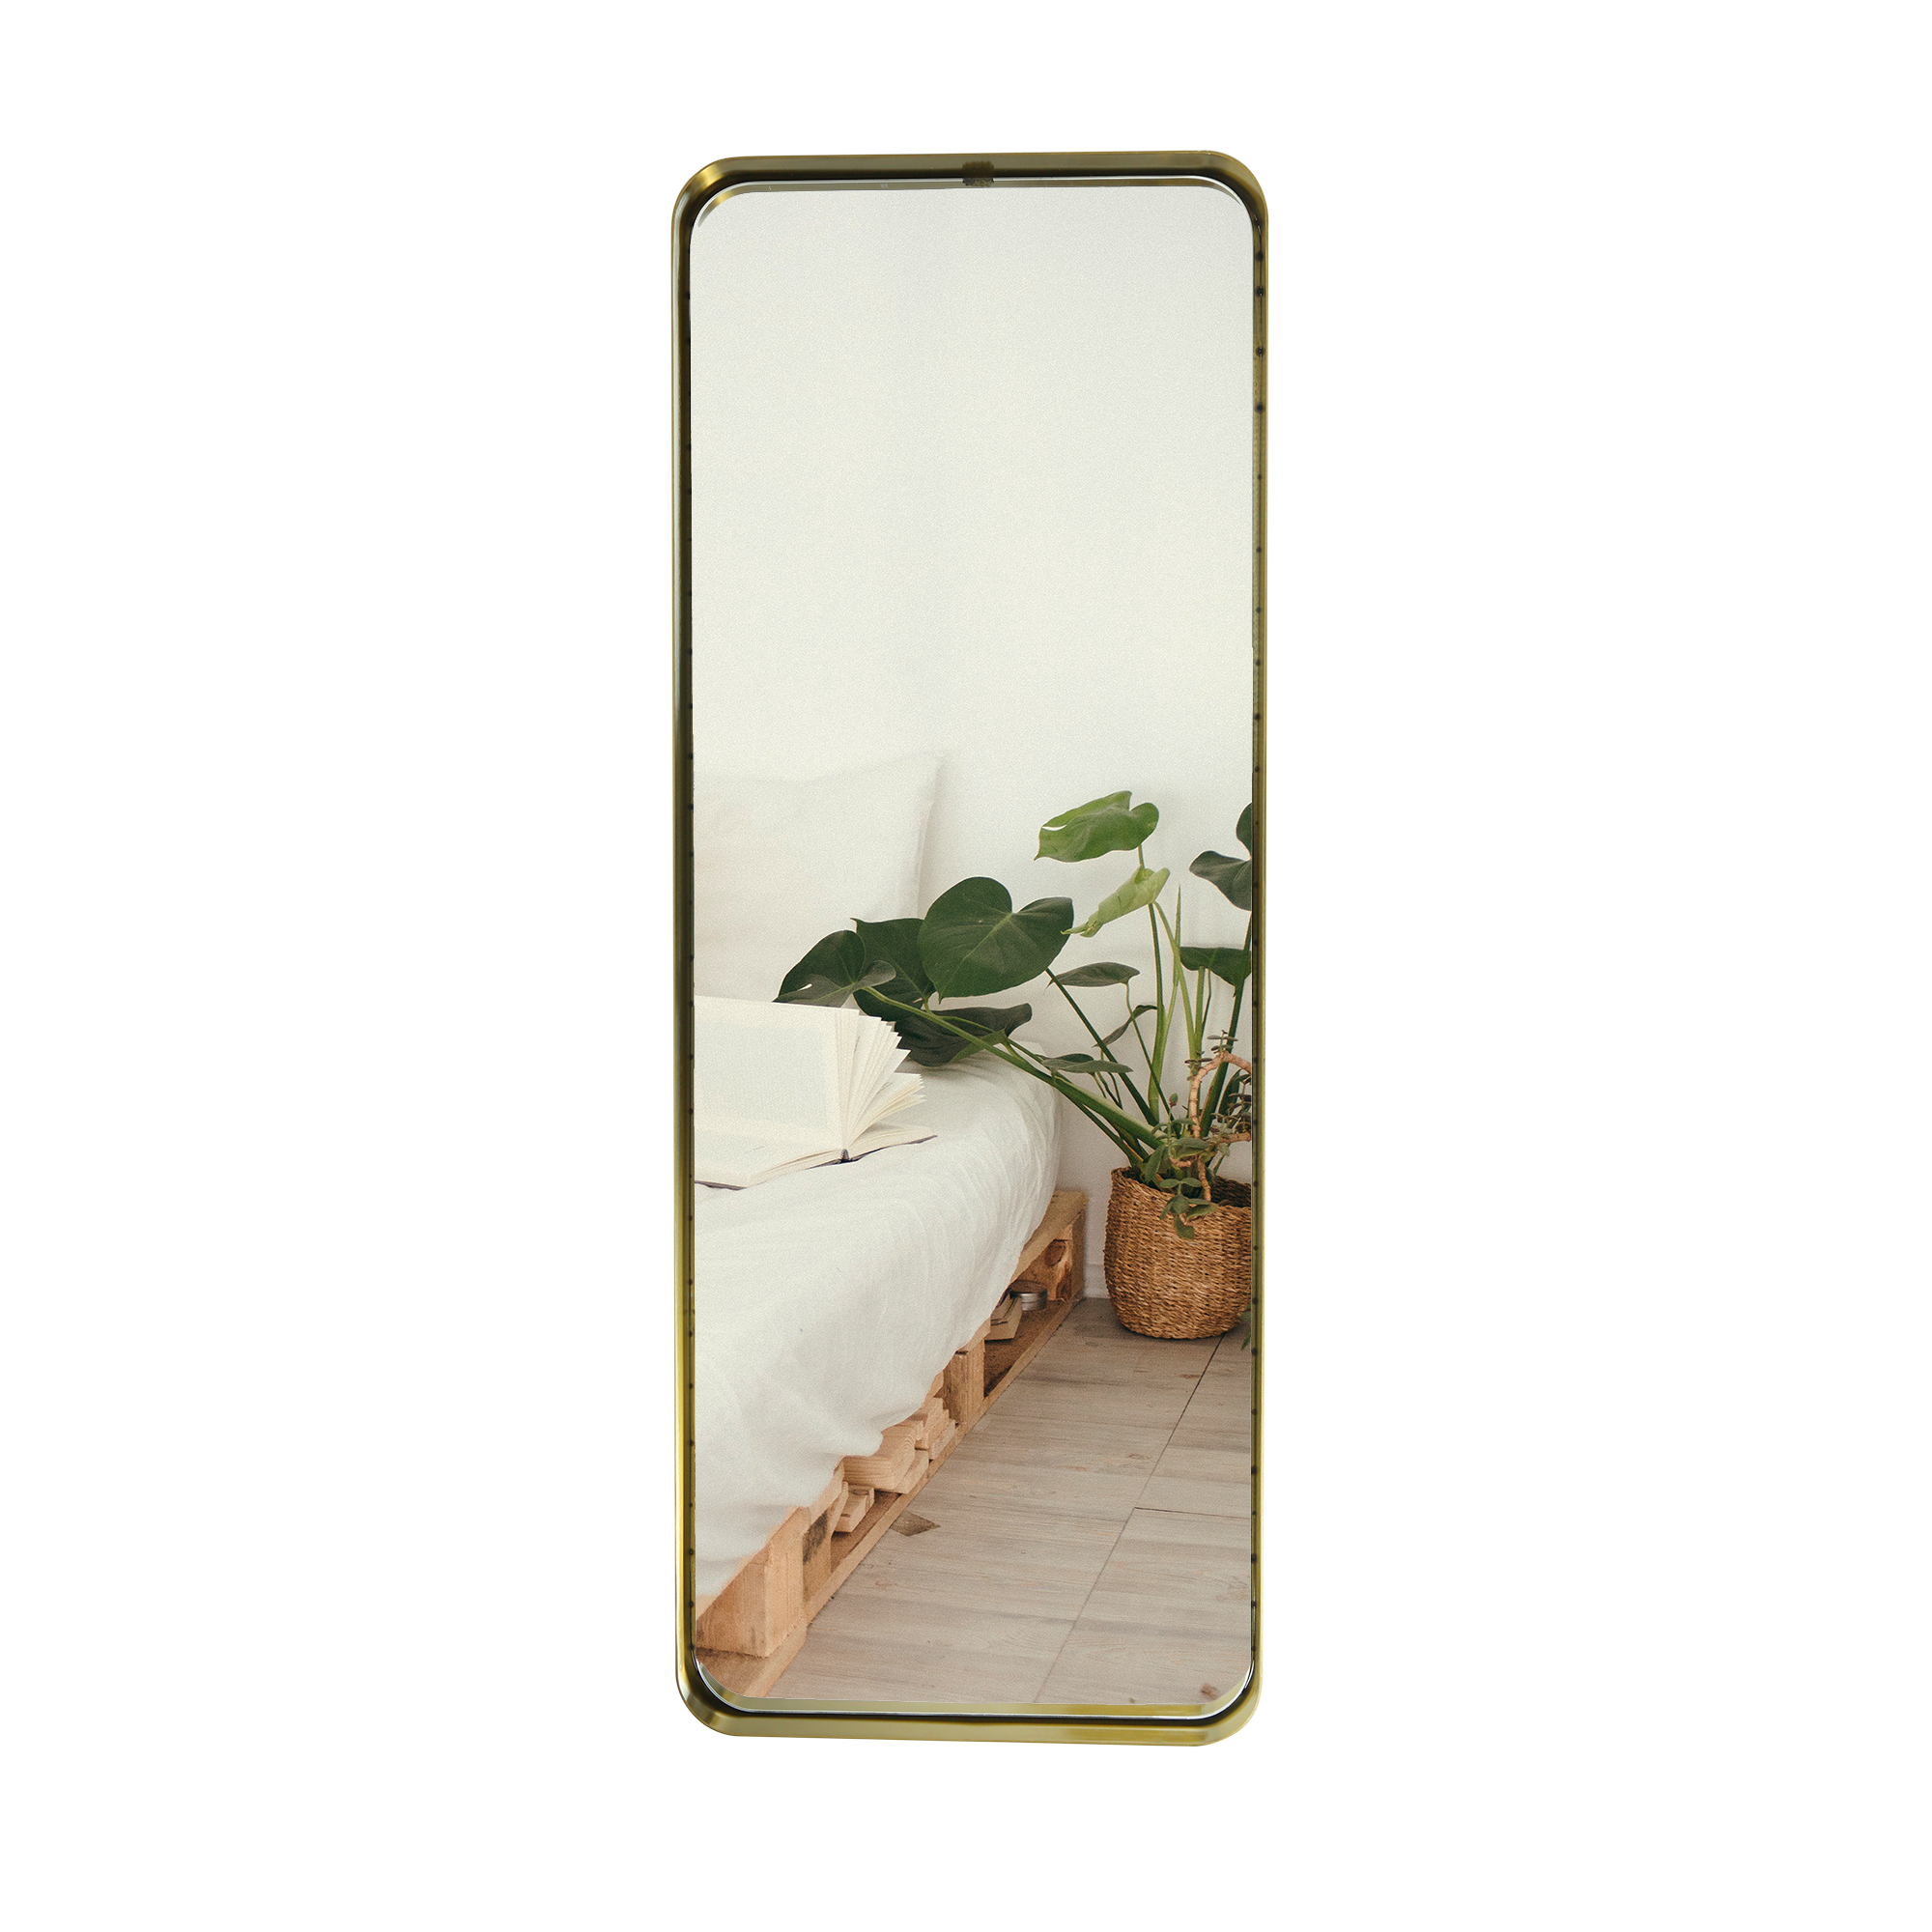 Gold Rectangle Mirror, 18"x 48”